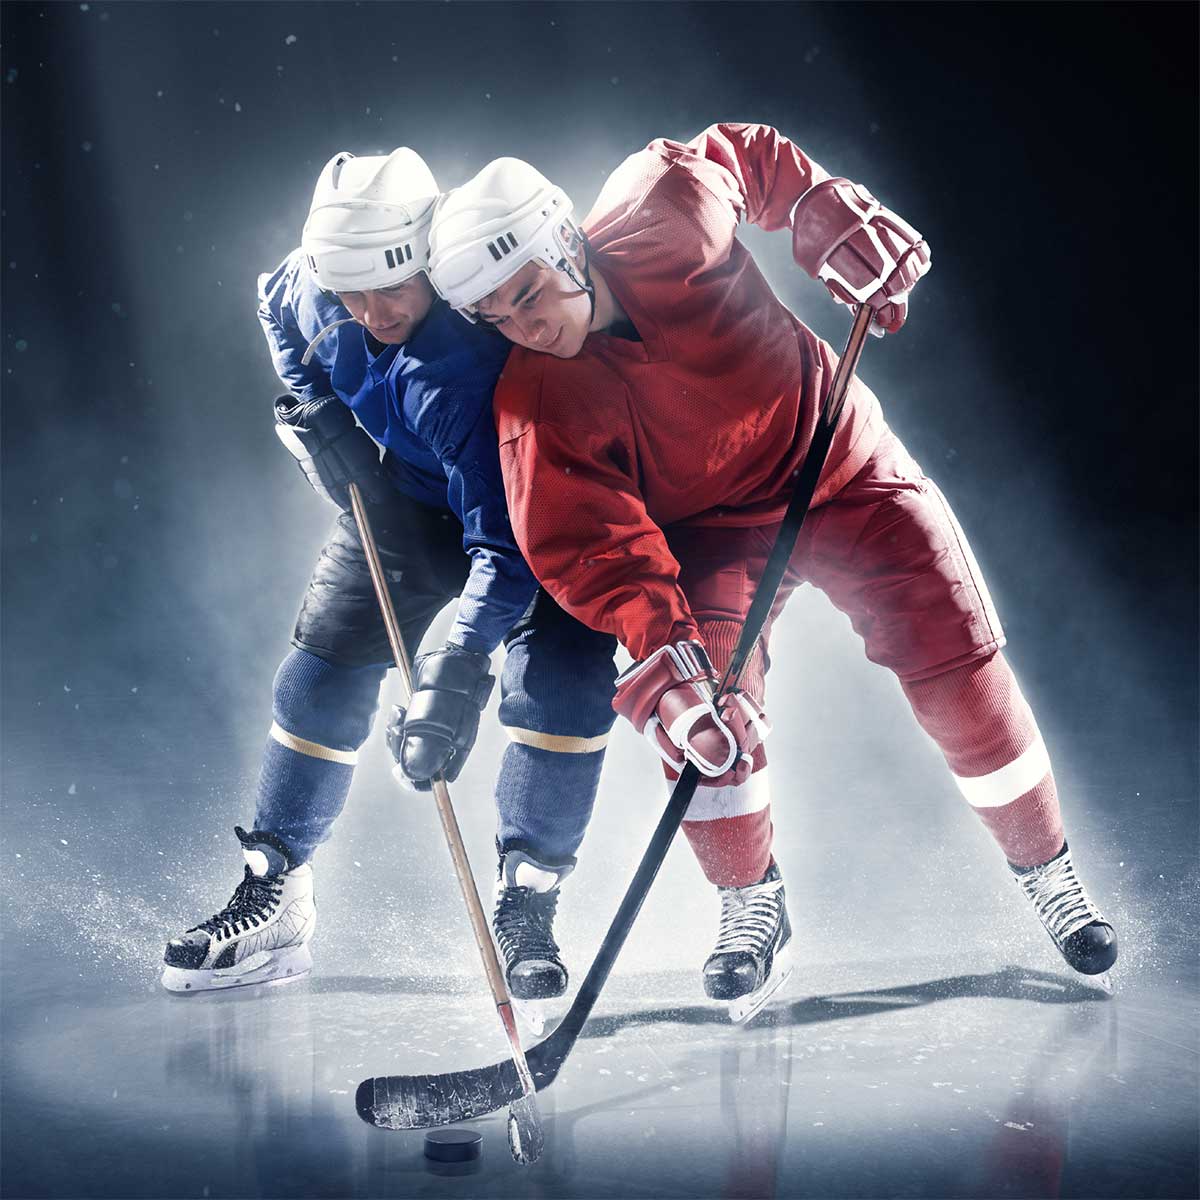 Hockey Jersey Manufacturers in Saratov